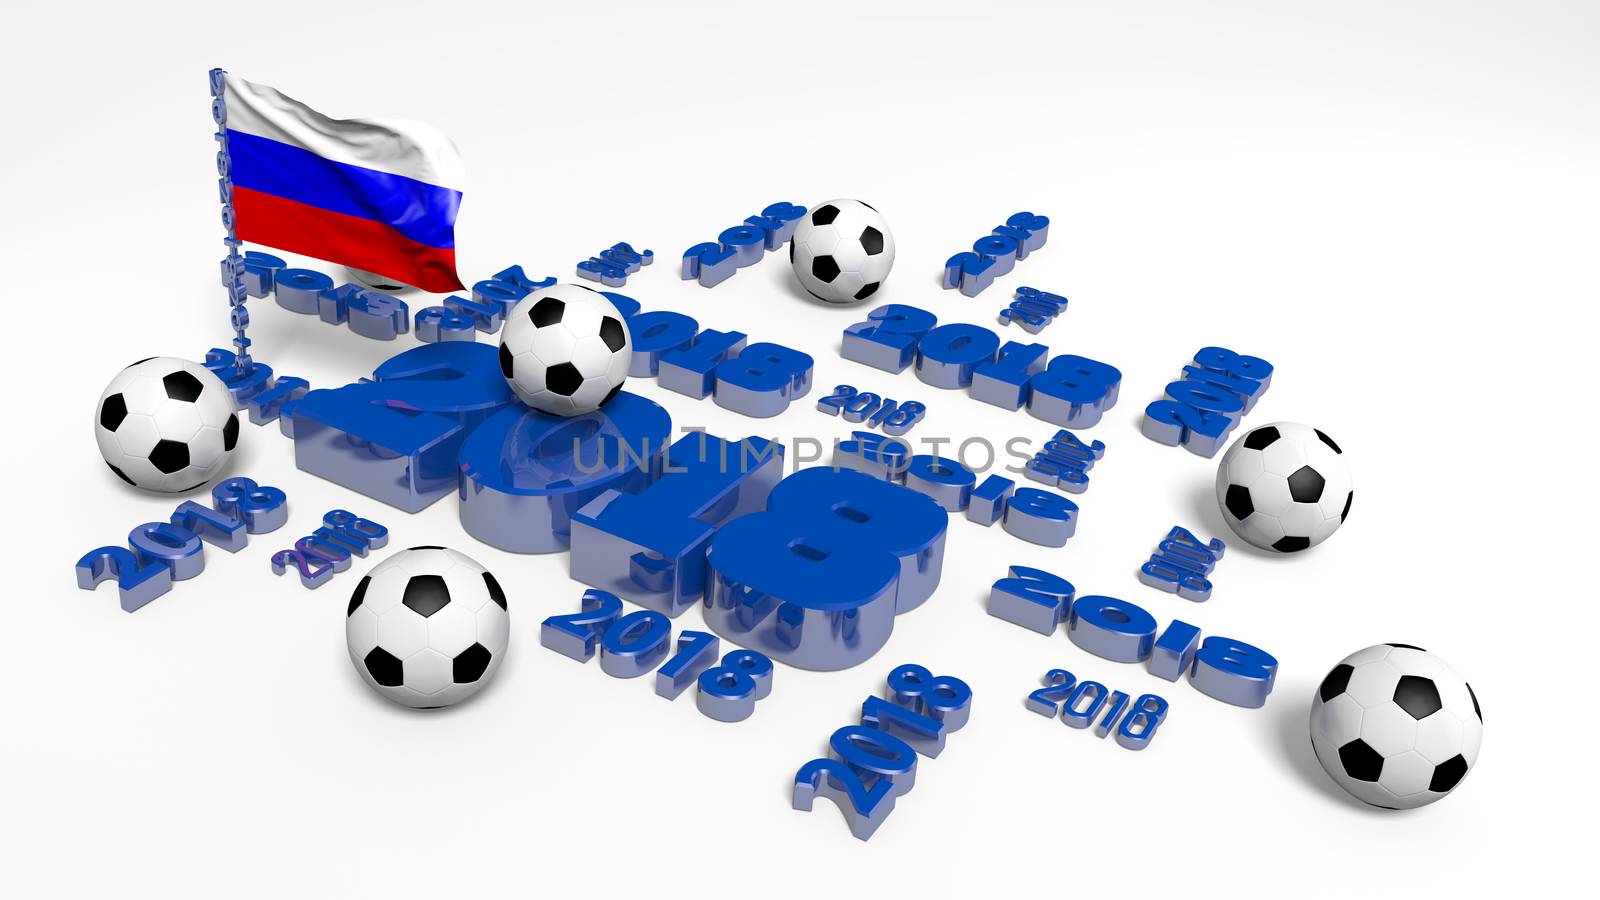 2018 Russian Flag and Footballs by shkyo30